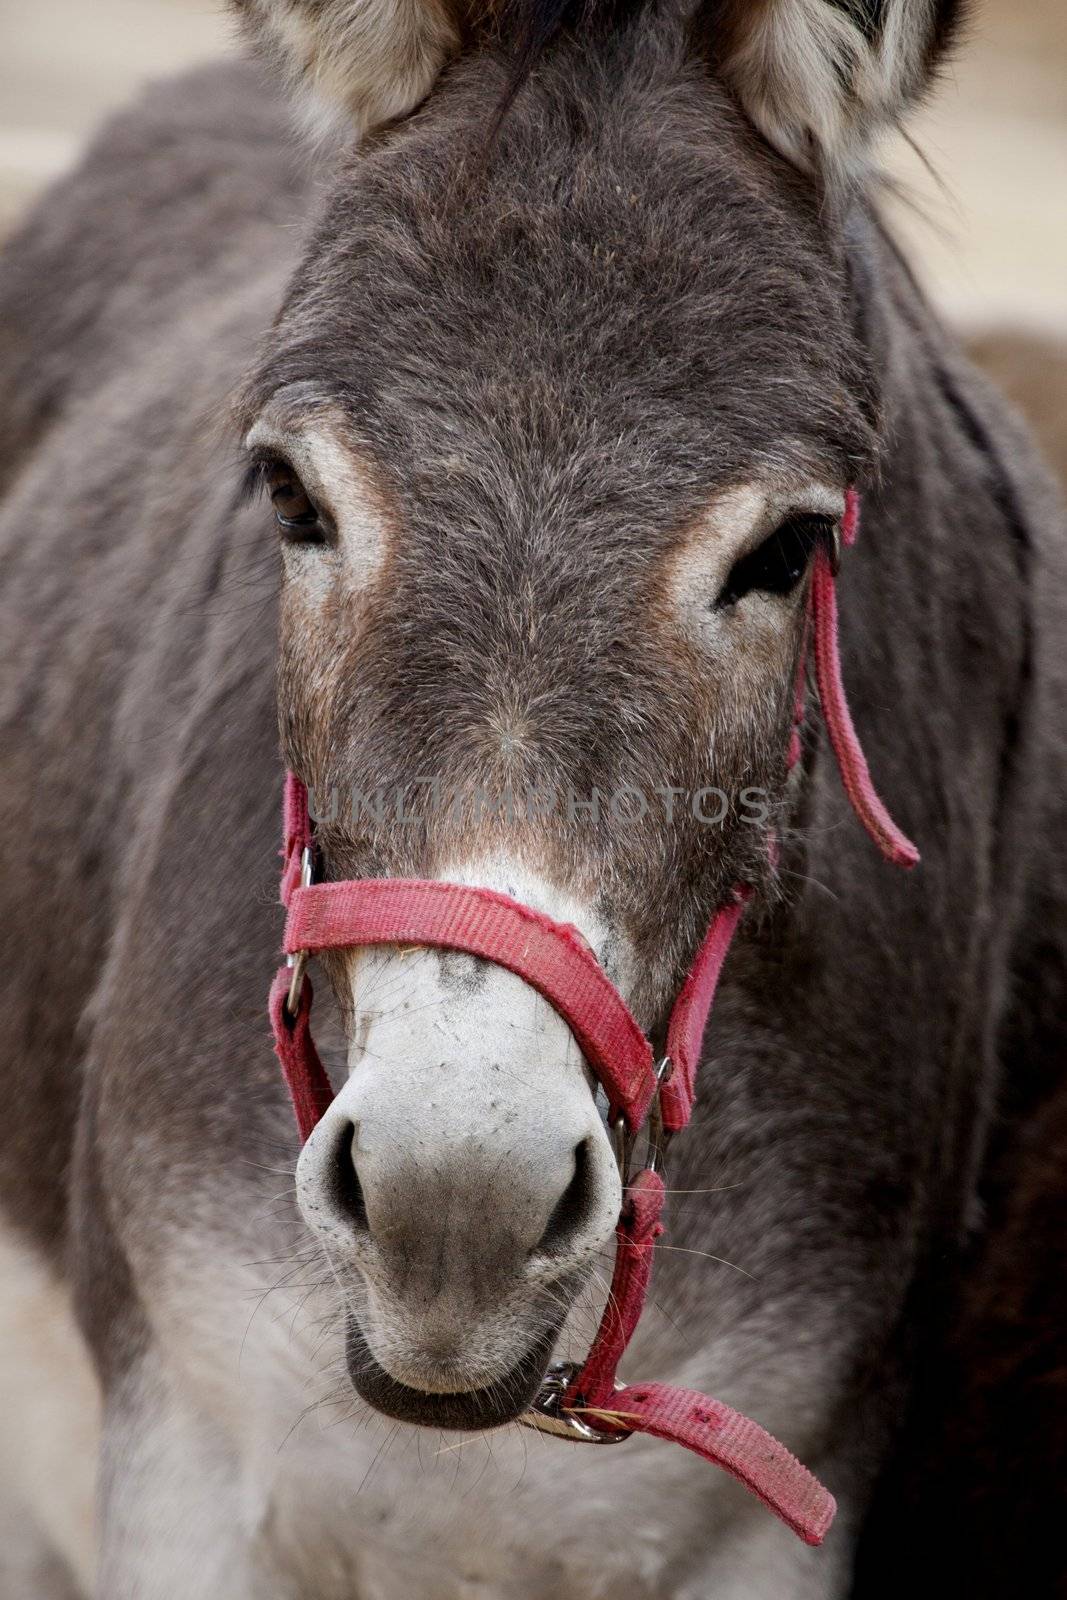 Portuguese donkey by membio